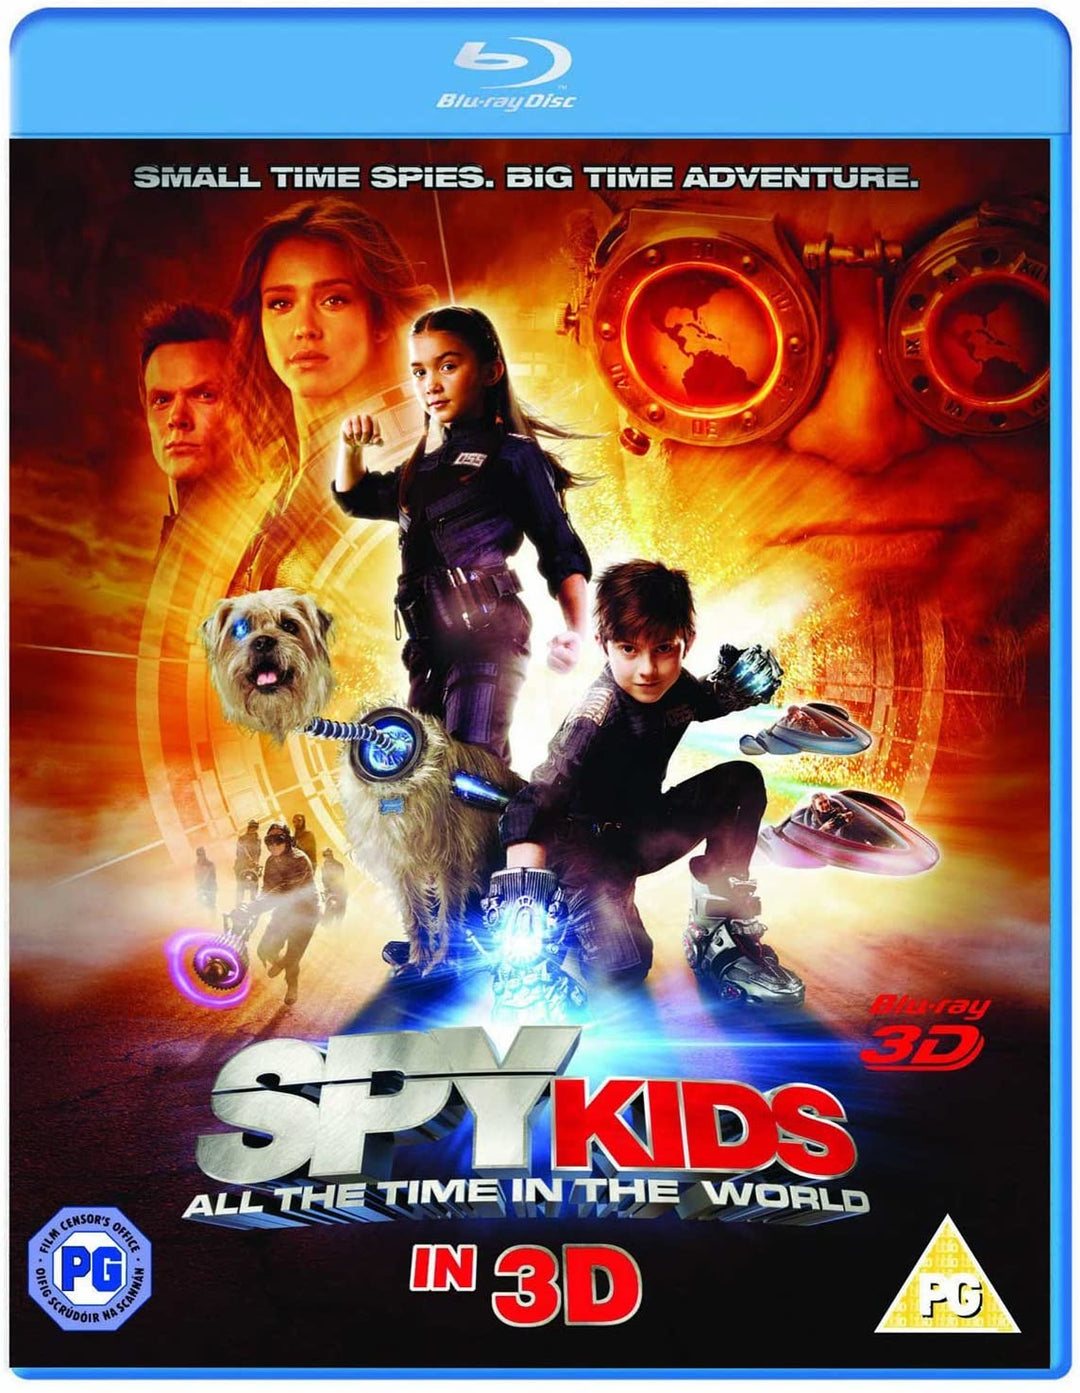 Spy Kids 4: tout le temps du monde (Blu-ray 3D) [2017]